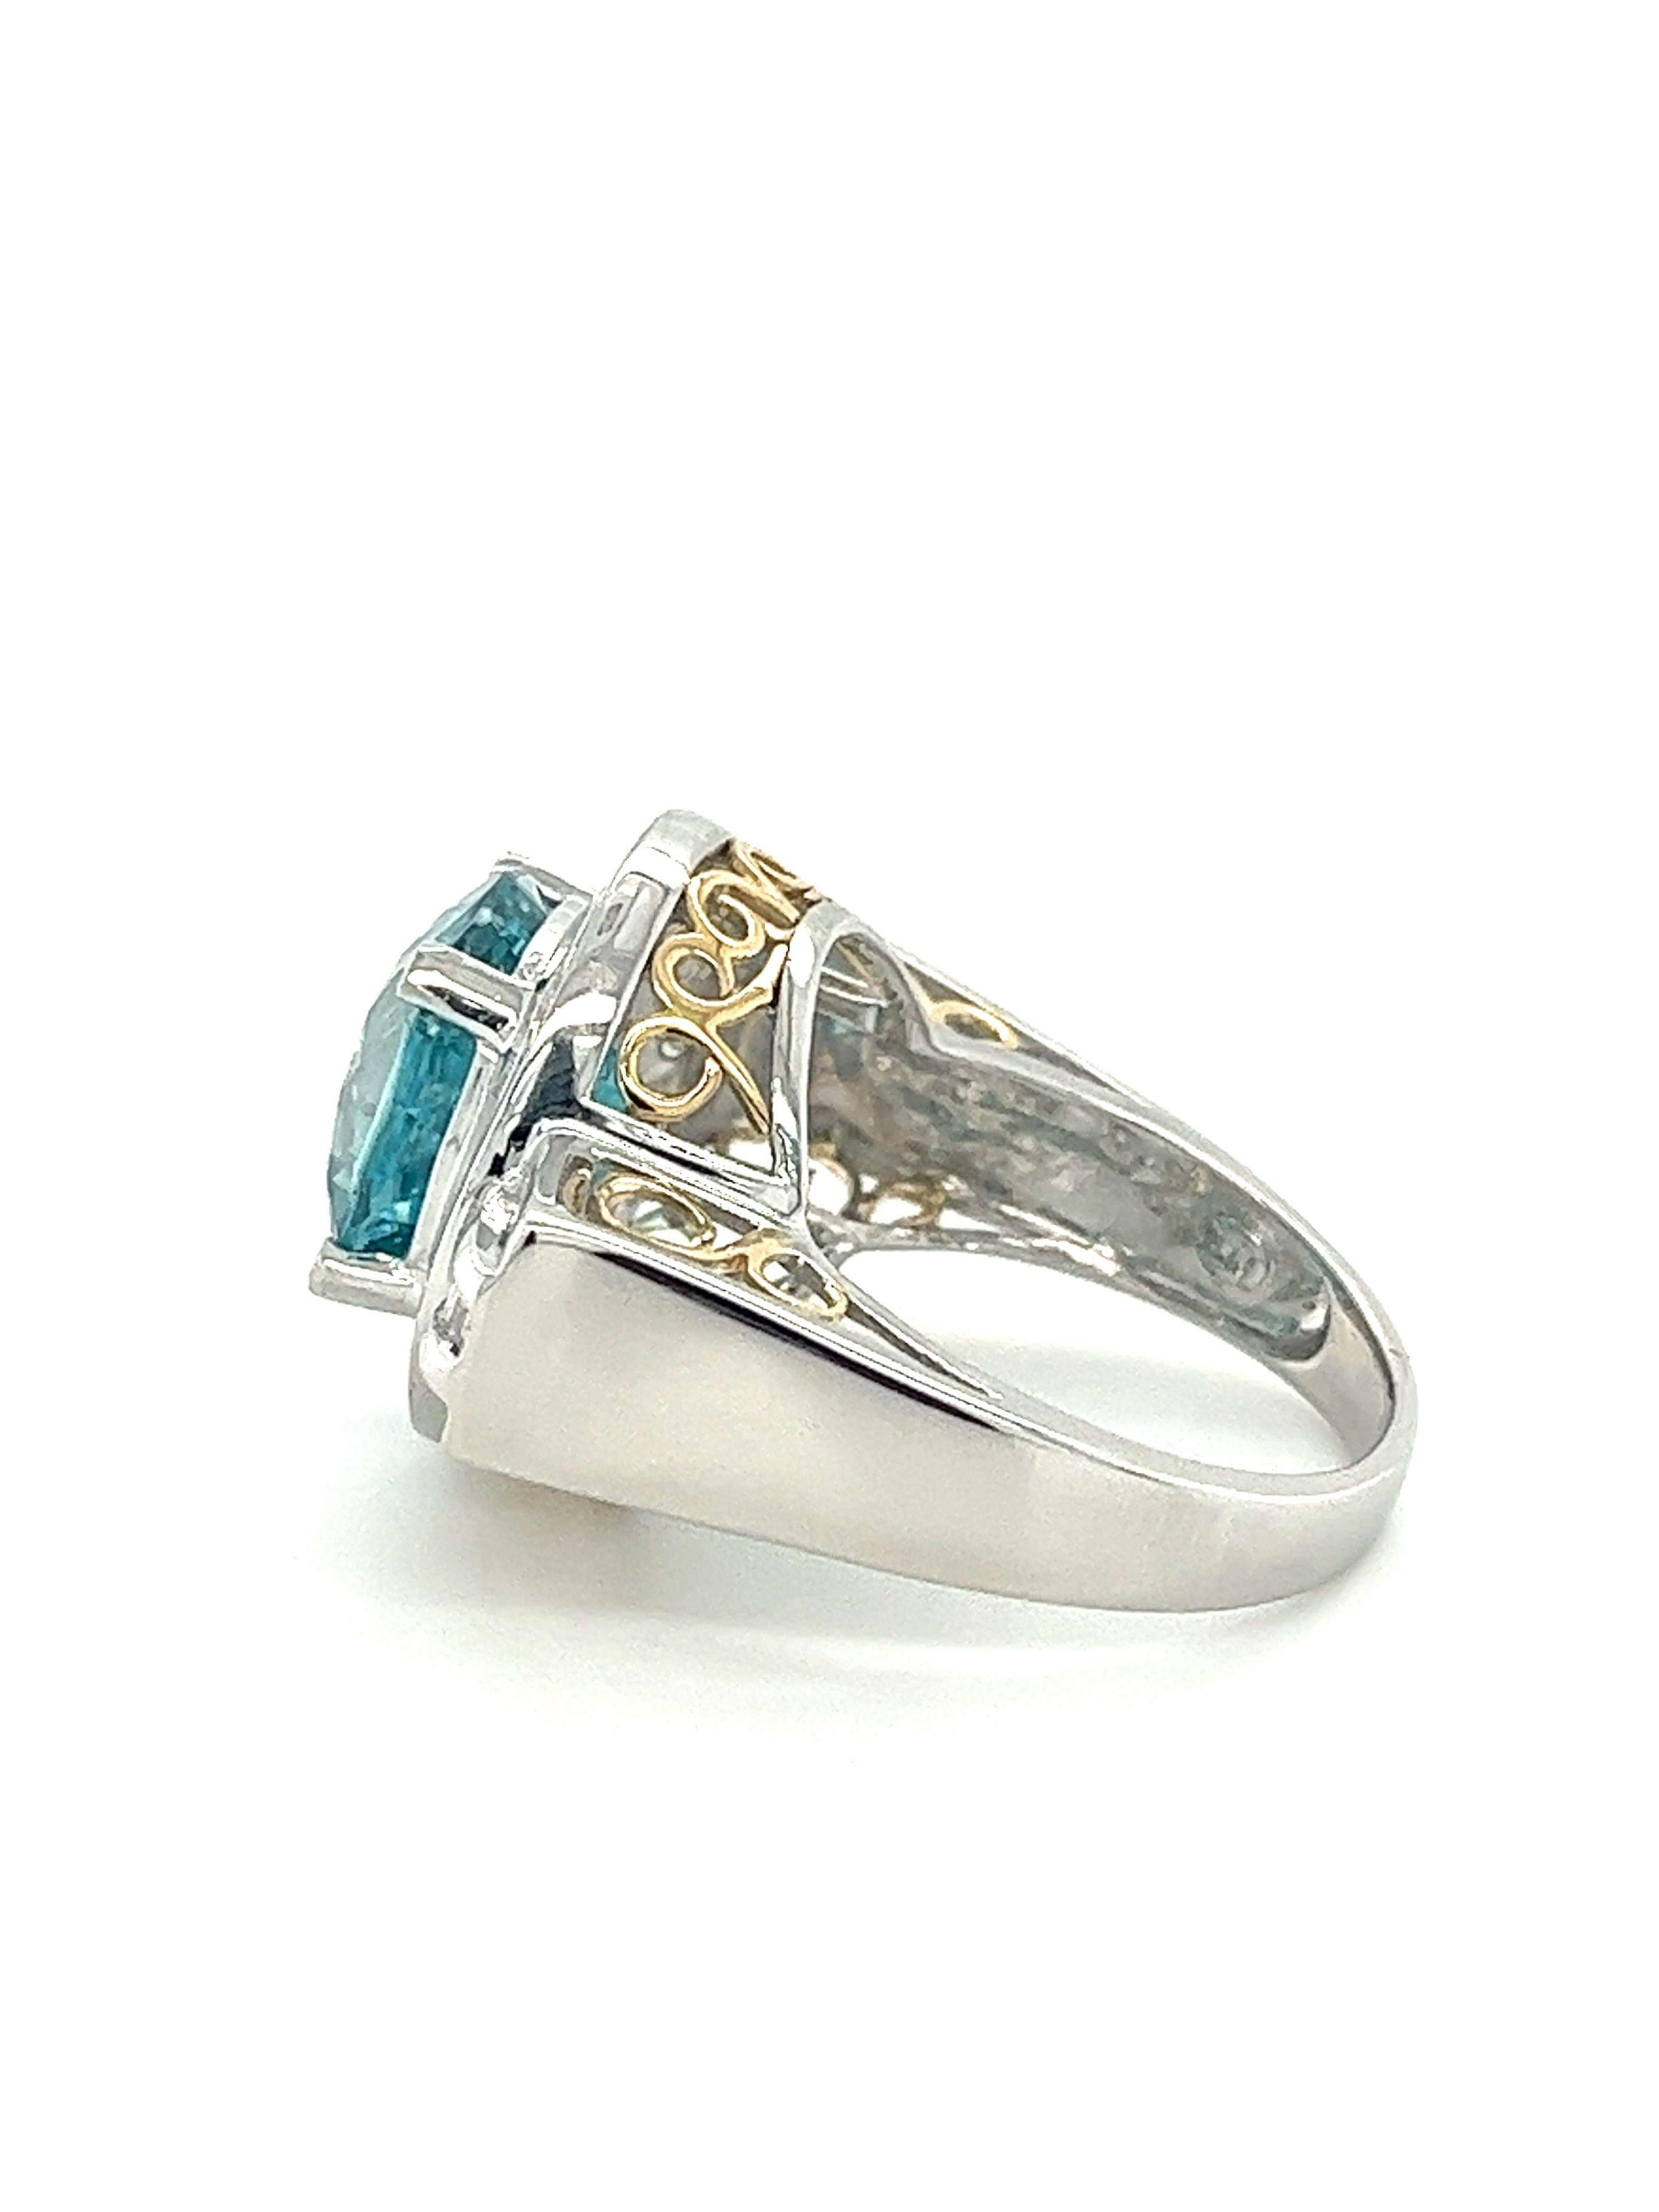 8 Carat Blue Zircon with Diamond Halo in Platinum & 18K Gold Filigree Ring  In New Condition For Sale In Miami, FL